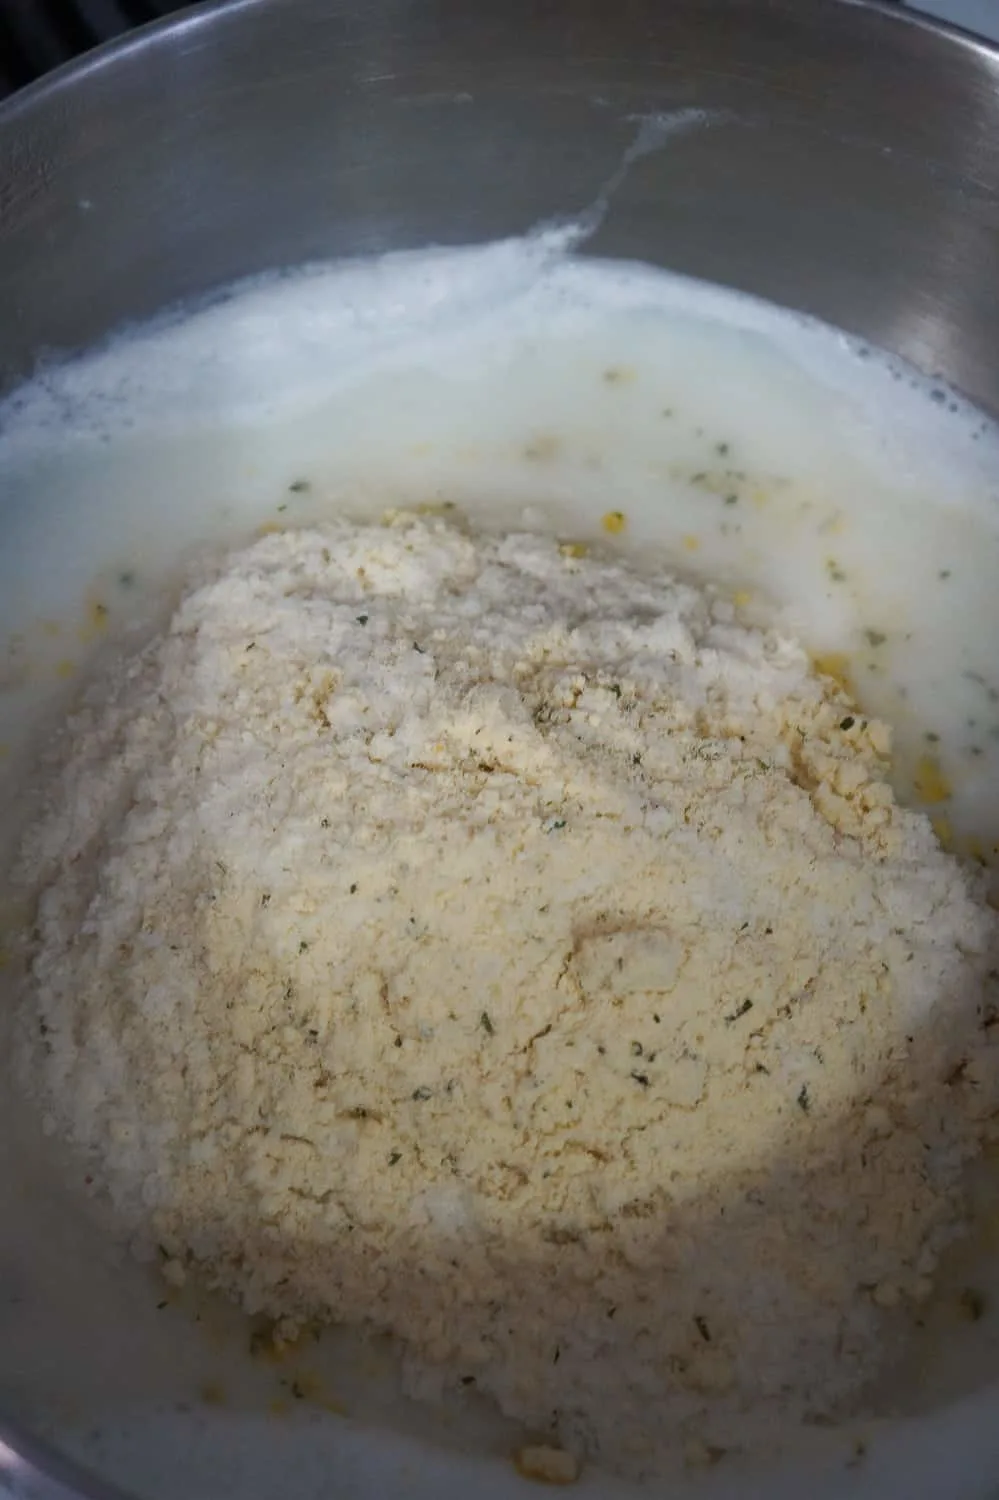 instant mashed potato powder added to boiling milk